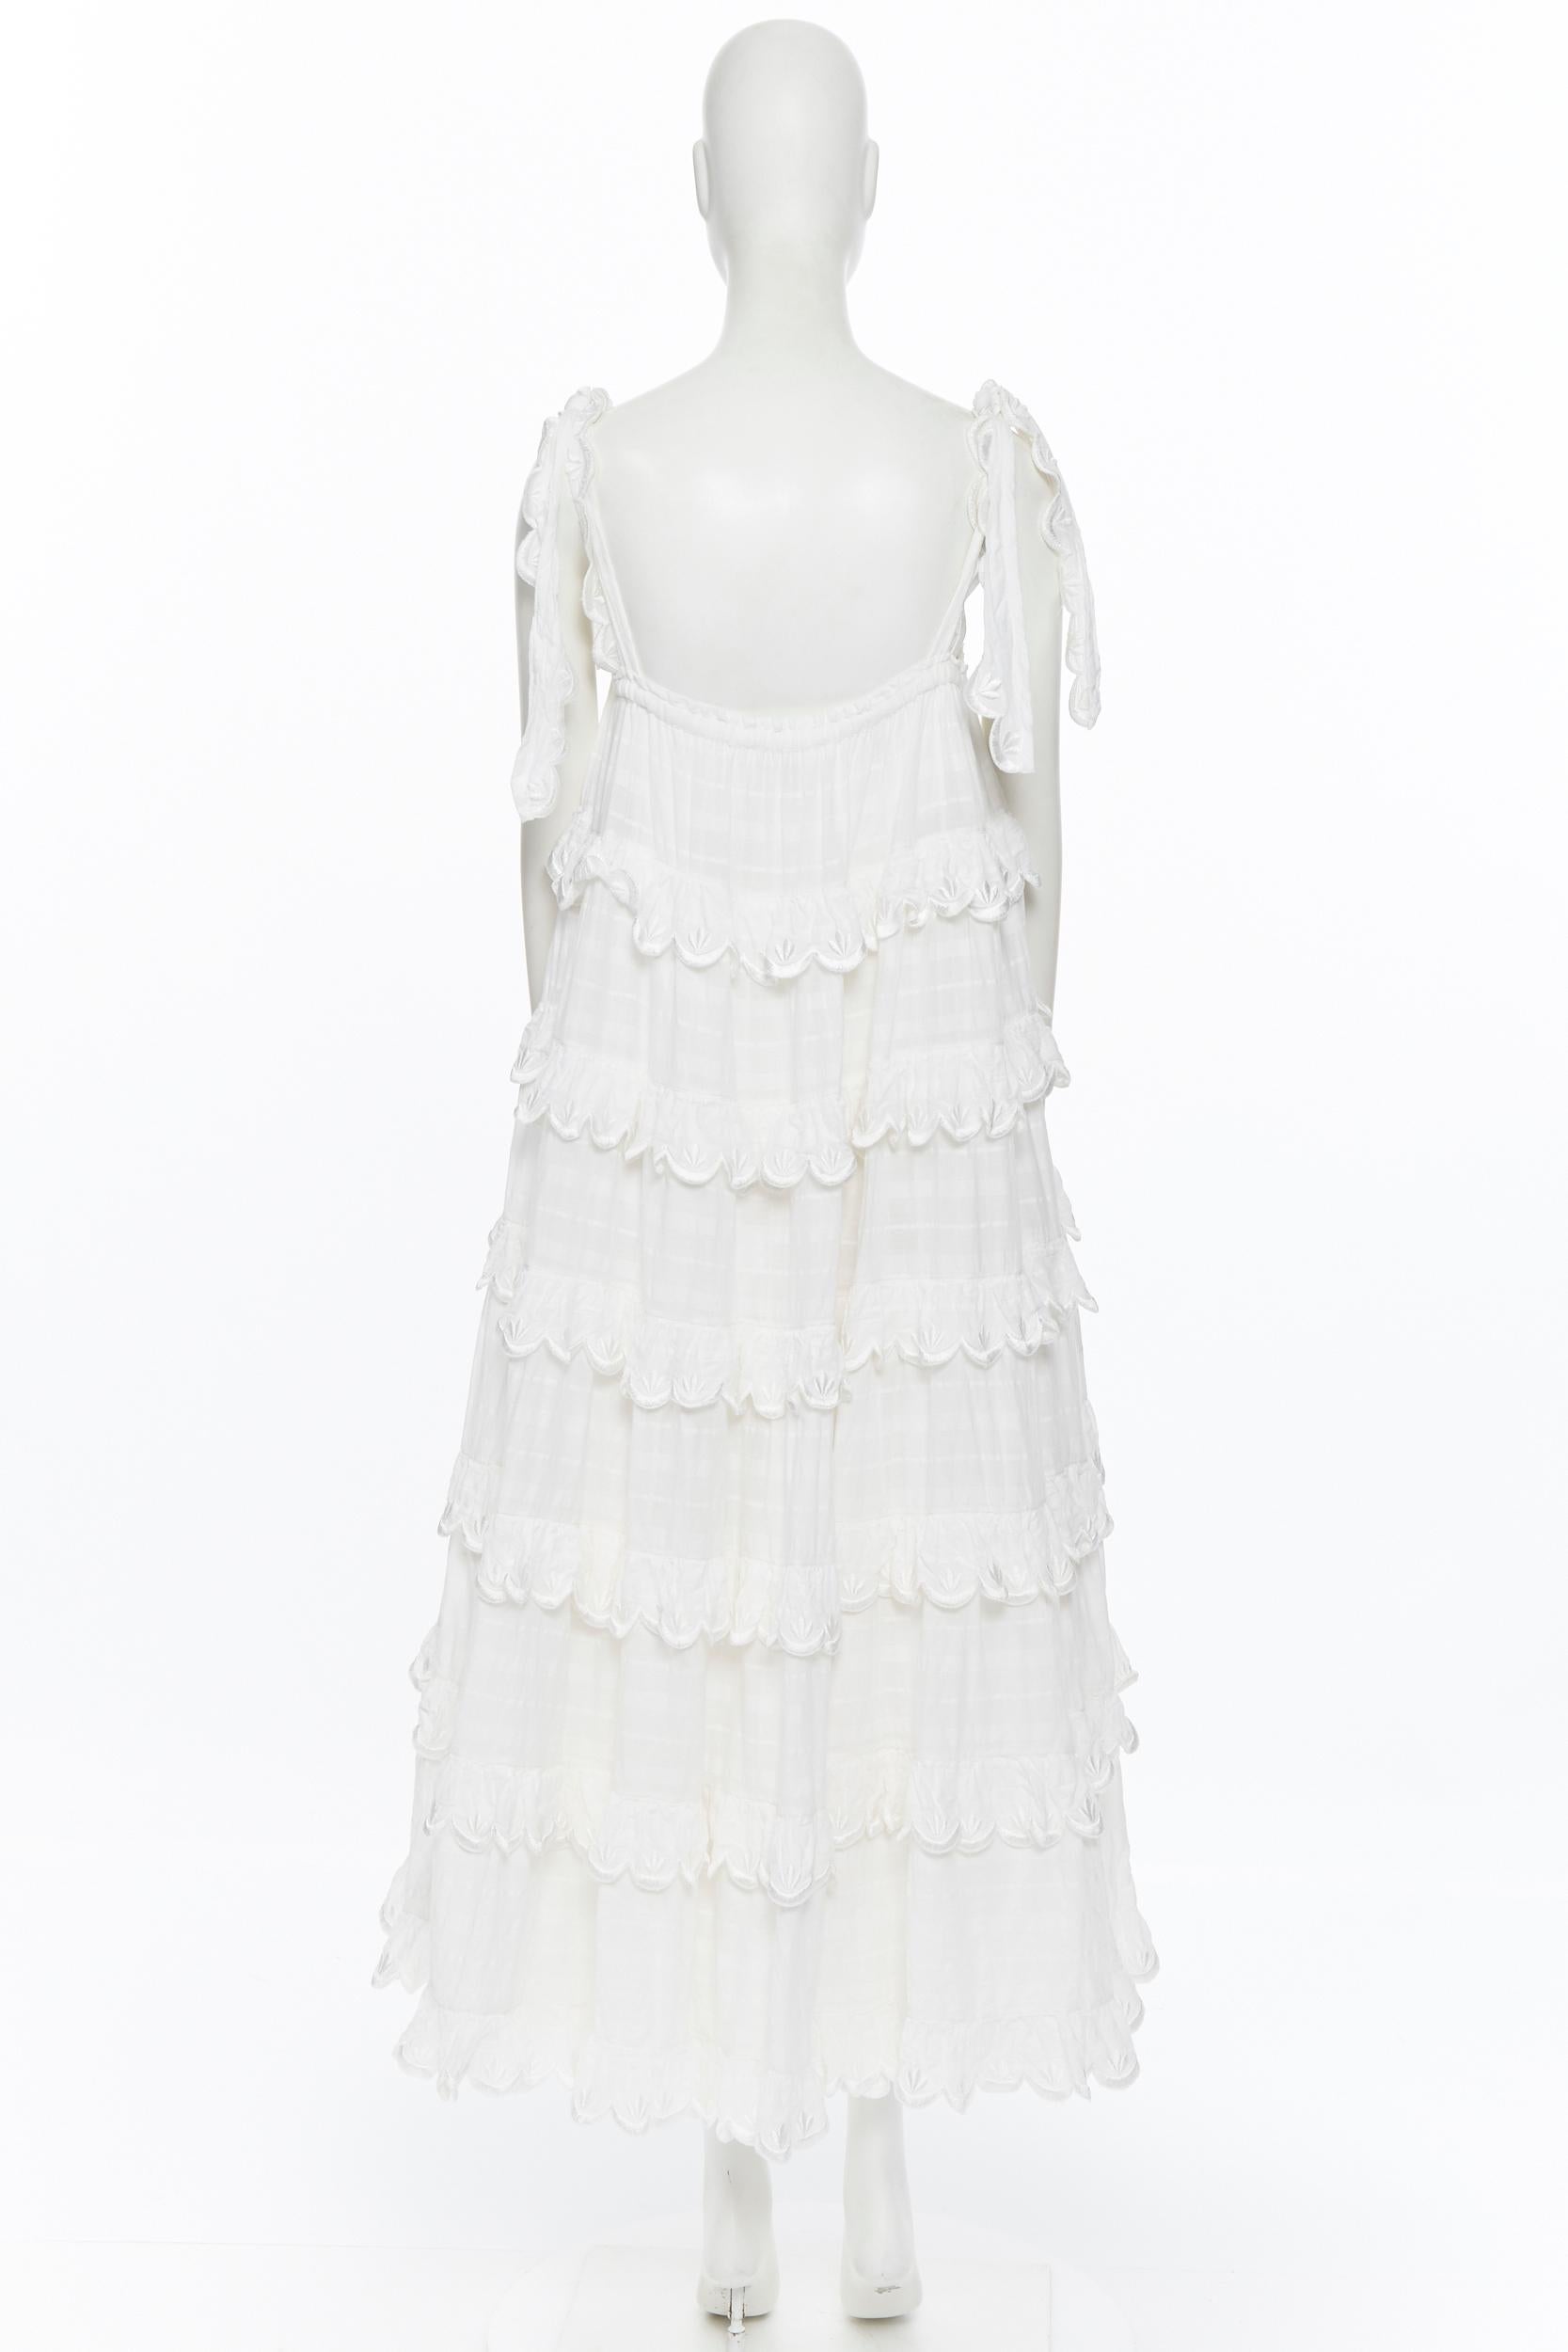 Gray INNIKA CHOO white cotton embroidered scallop petal tiered bohemian tent dress